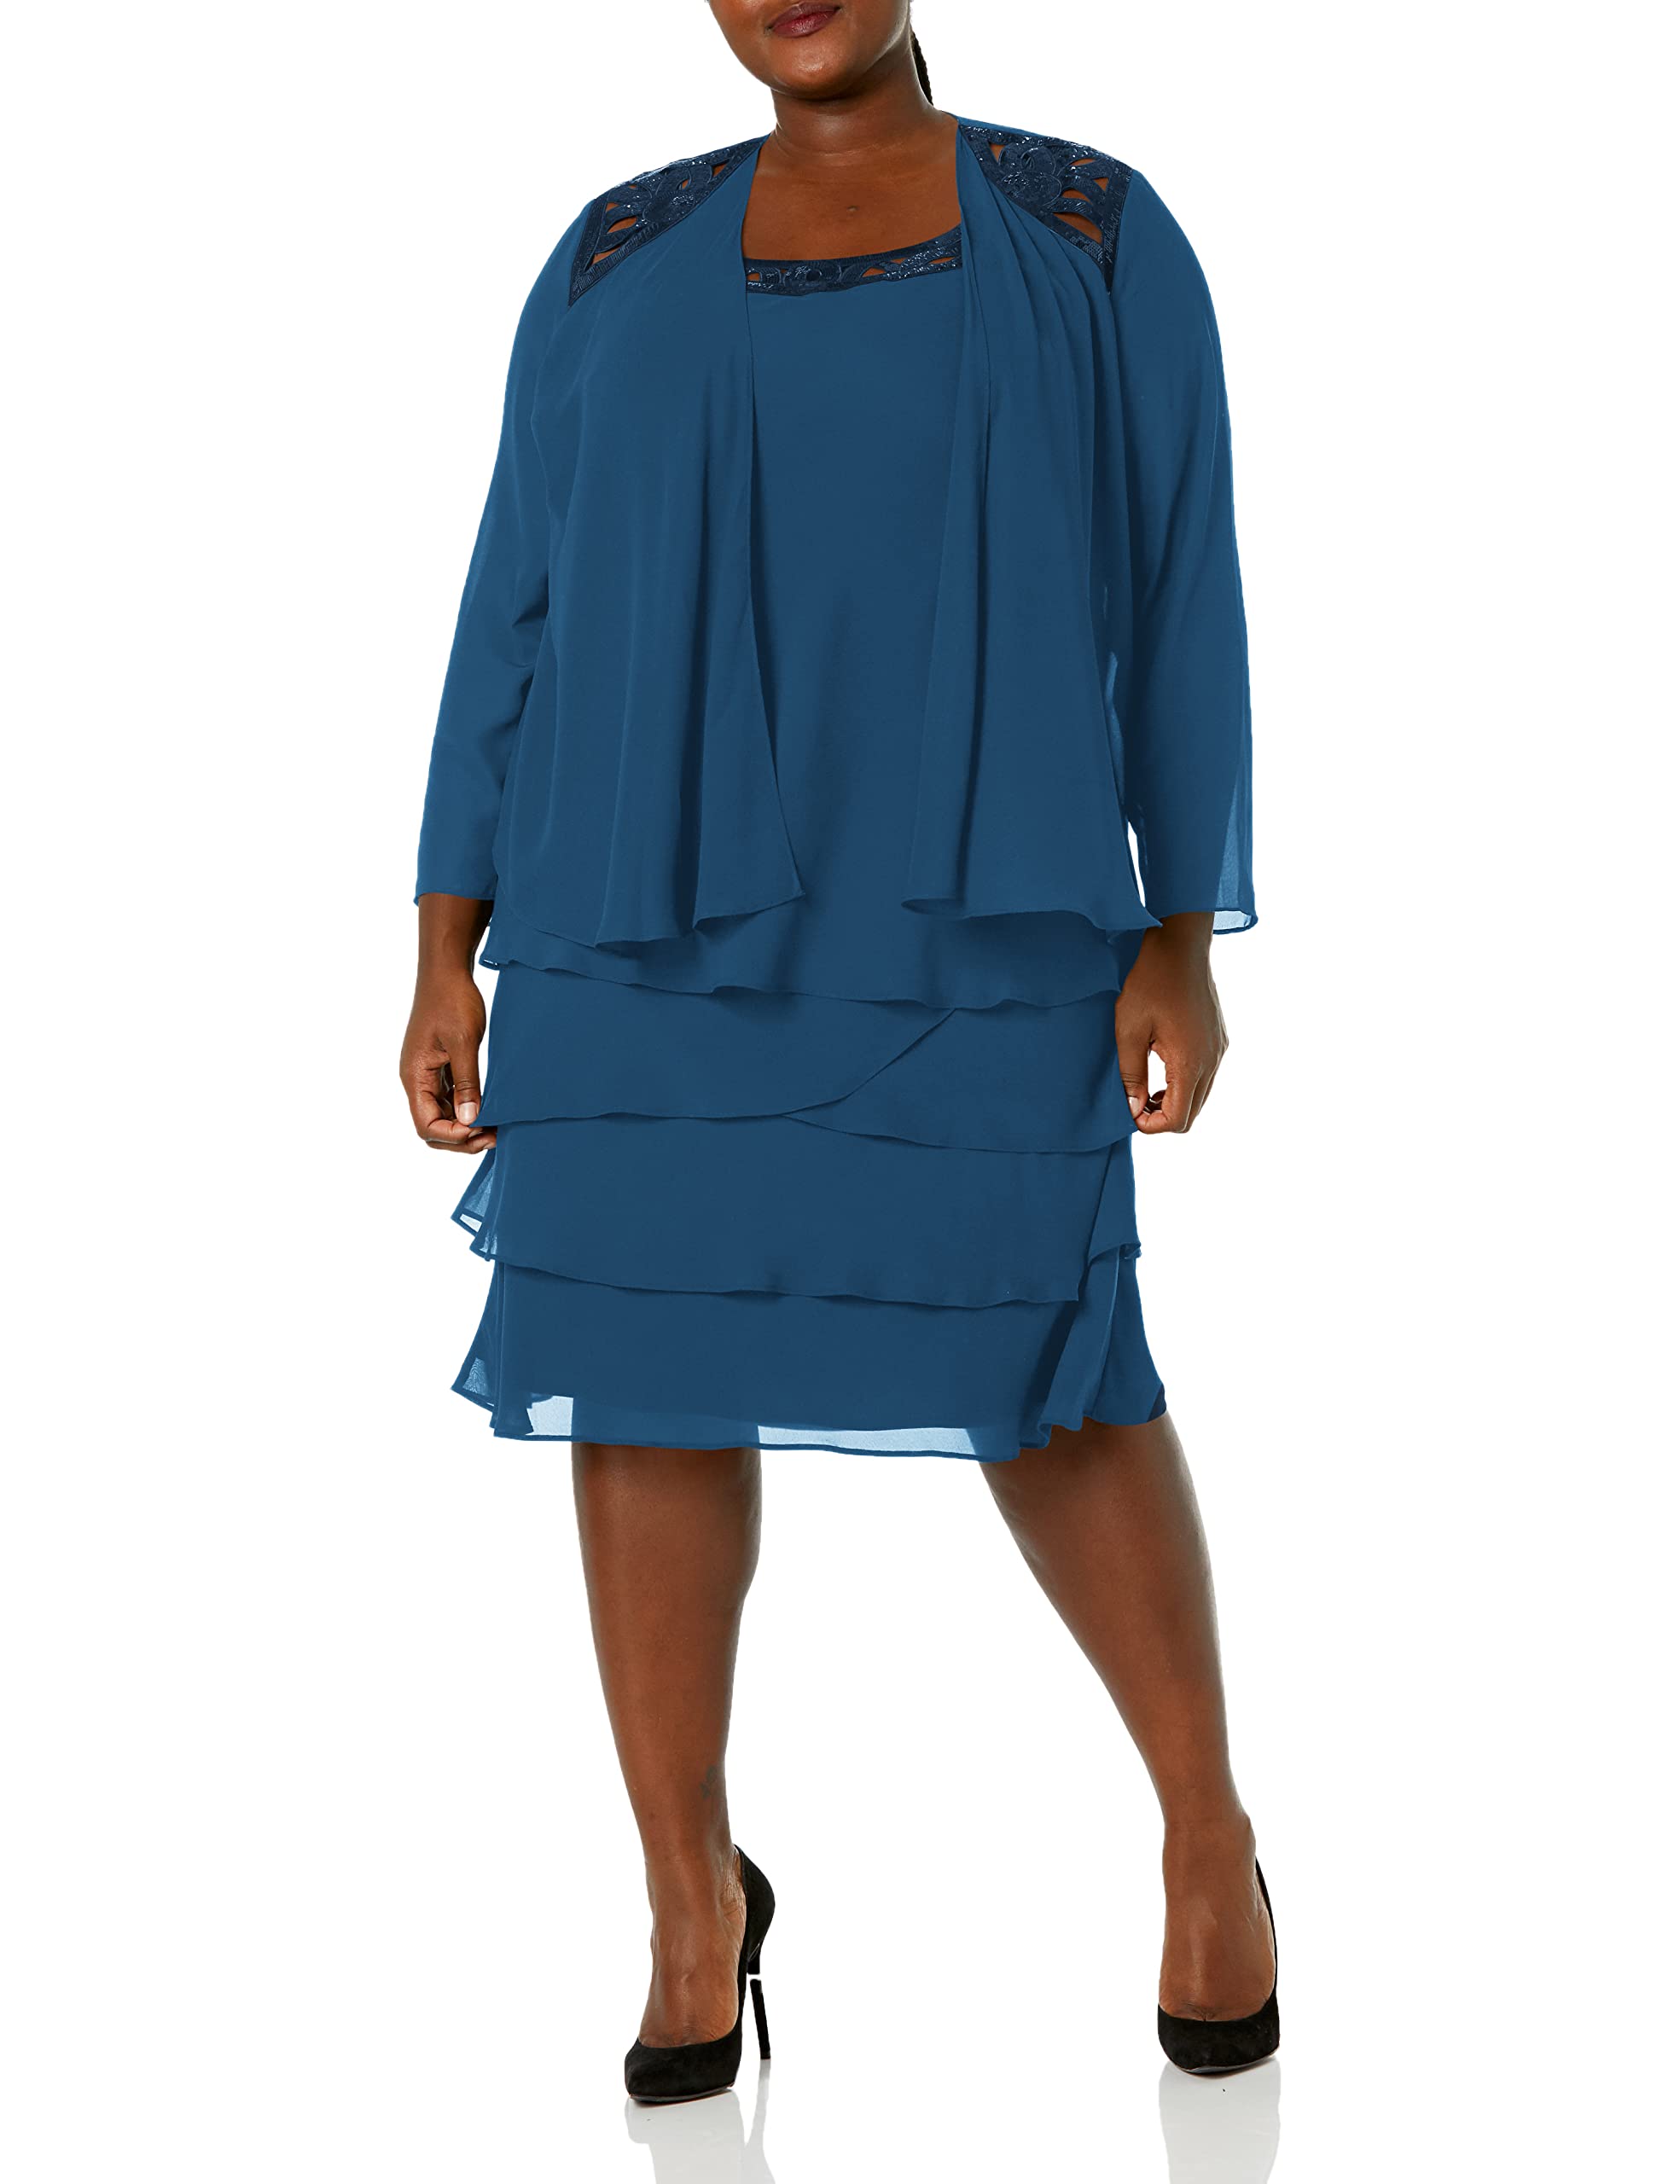 S.L. Fashions Women's Plus-Size Sequin Chiffon Jacket Dress